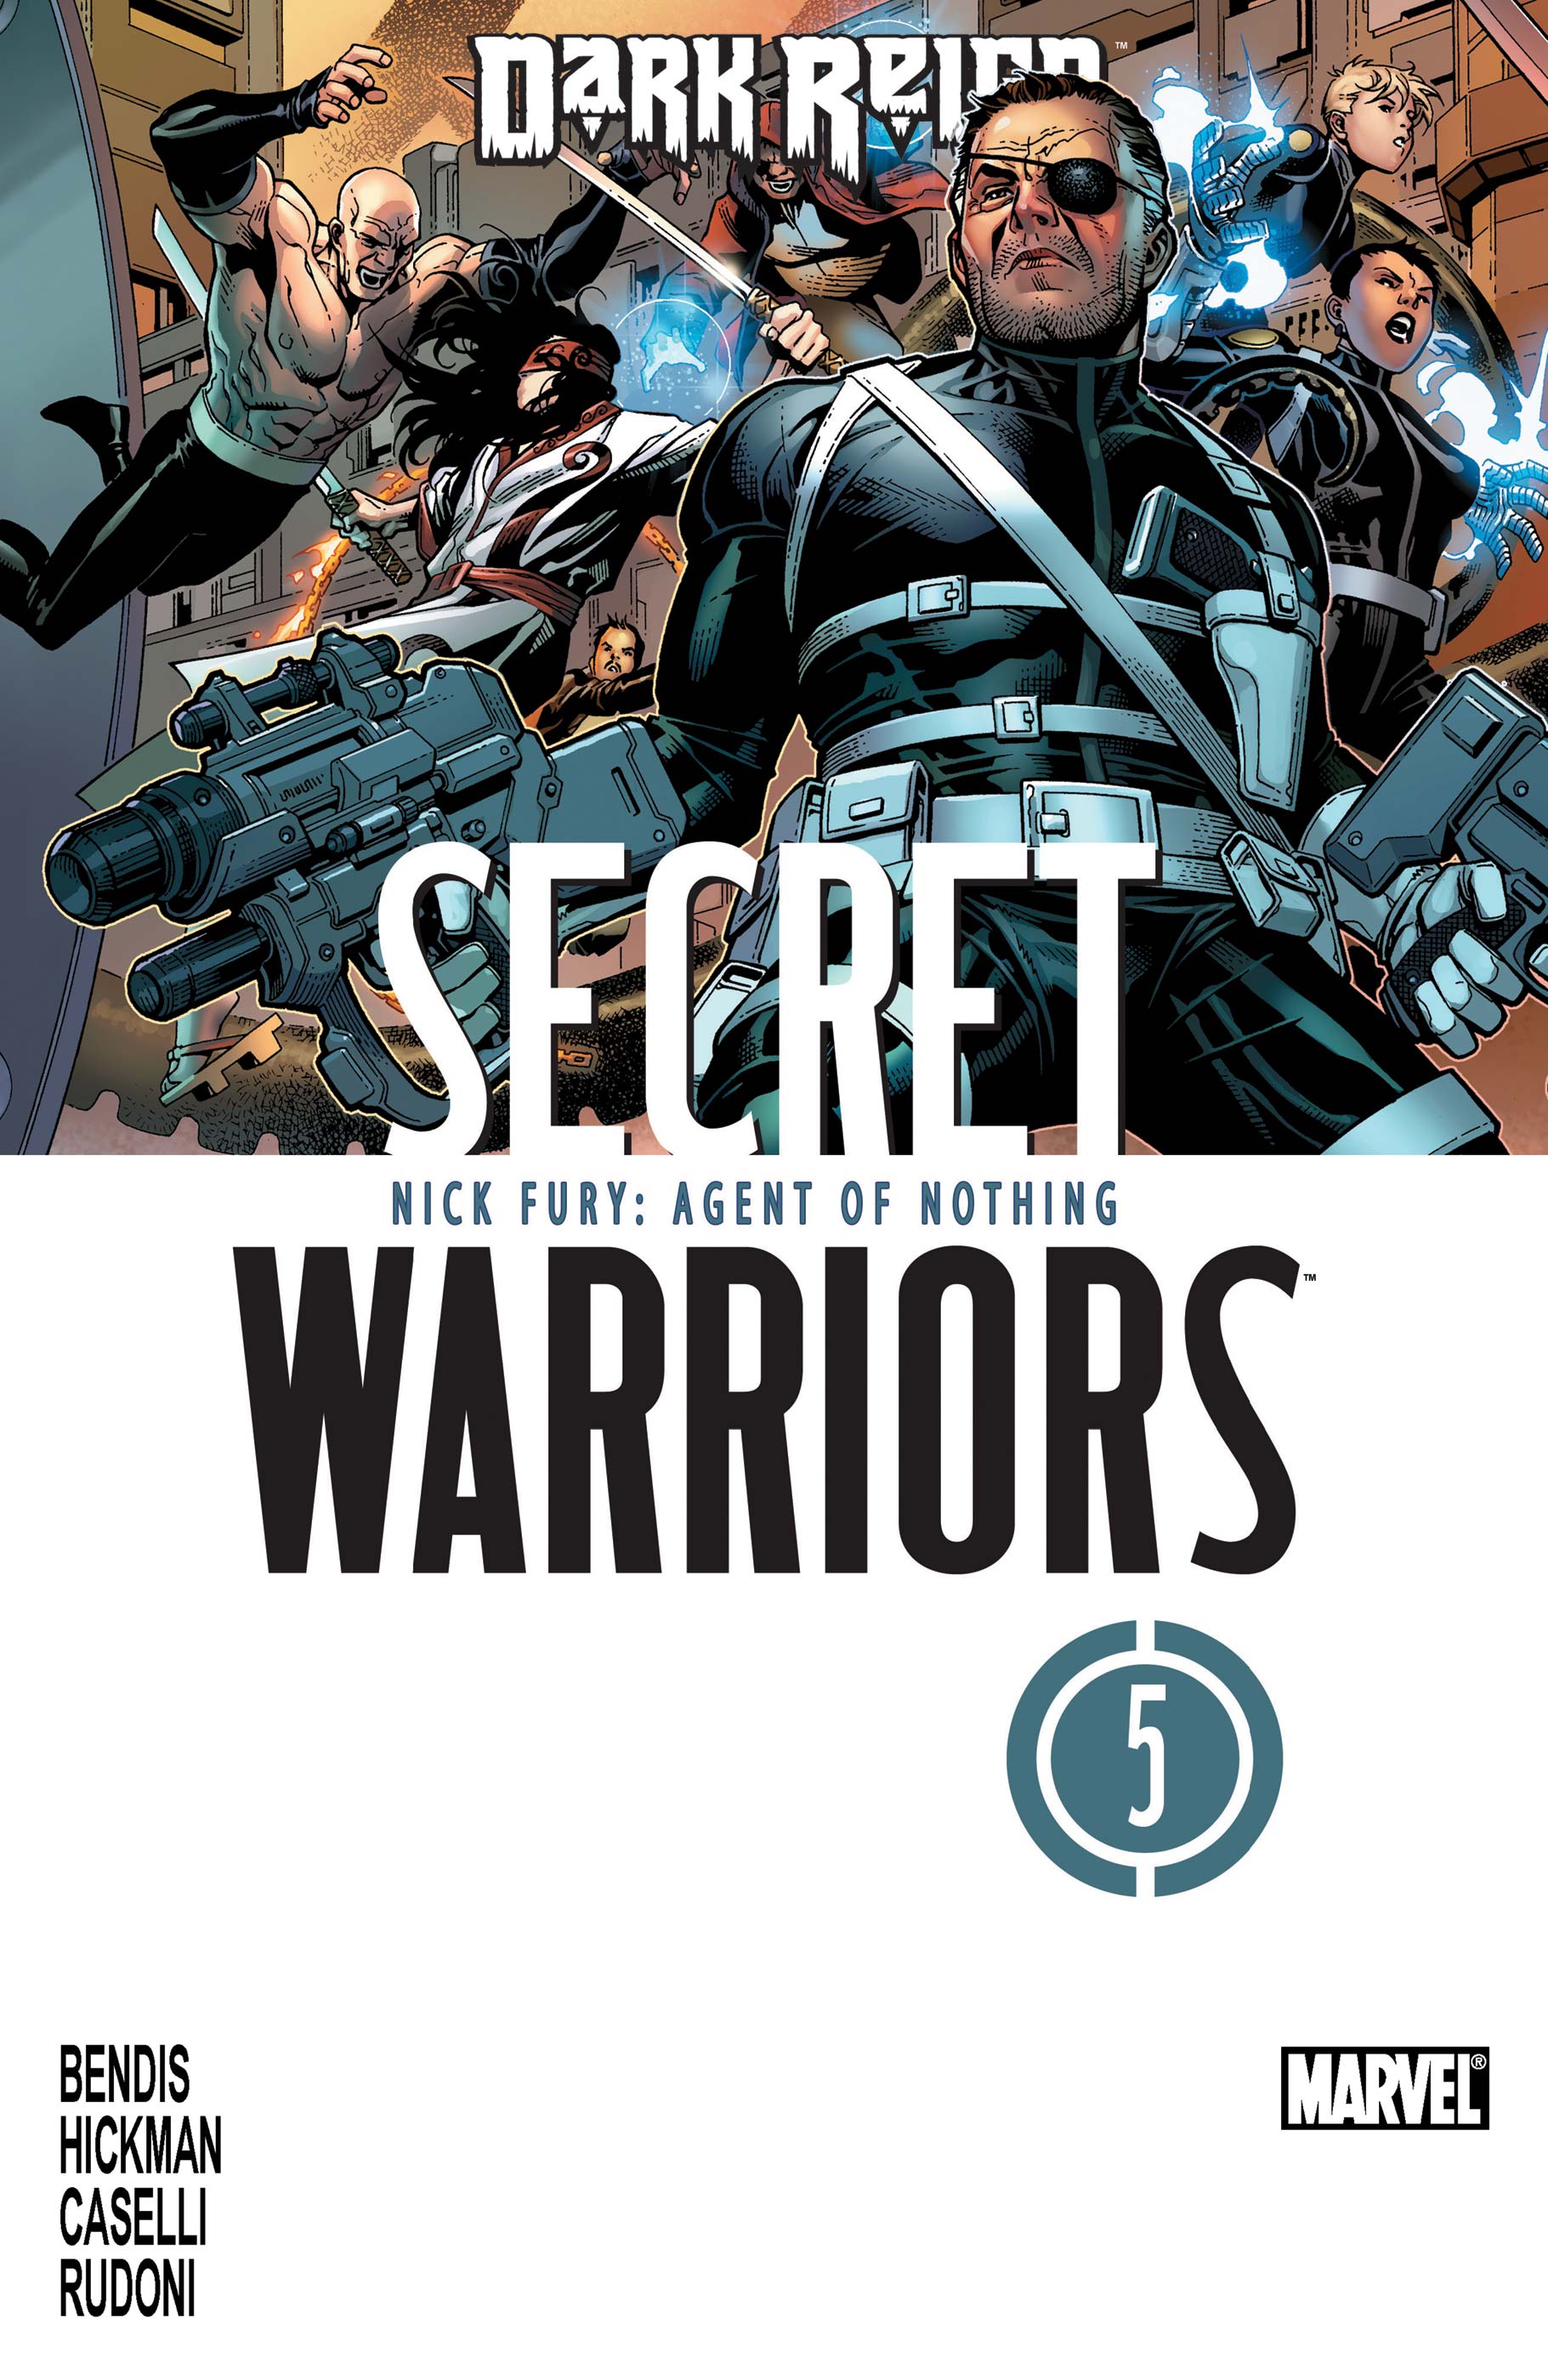 Secret Warriors (2009) #5